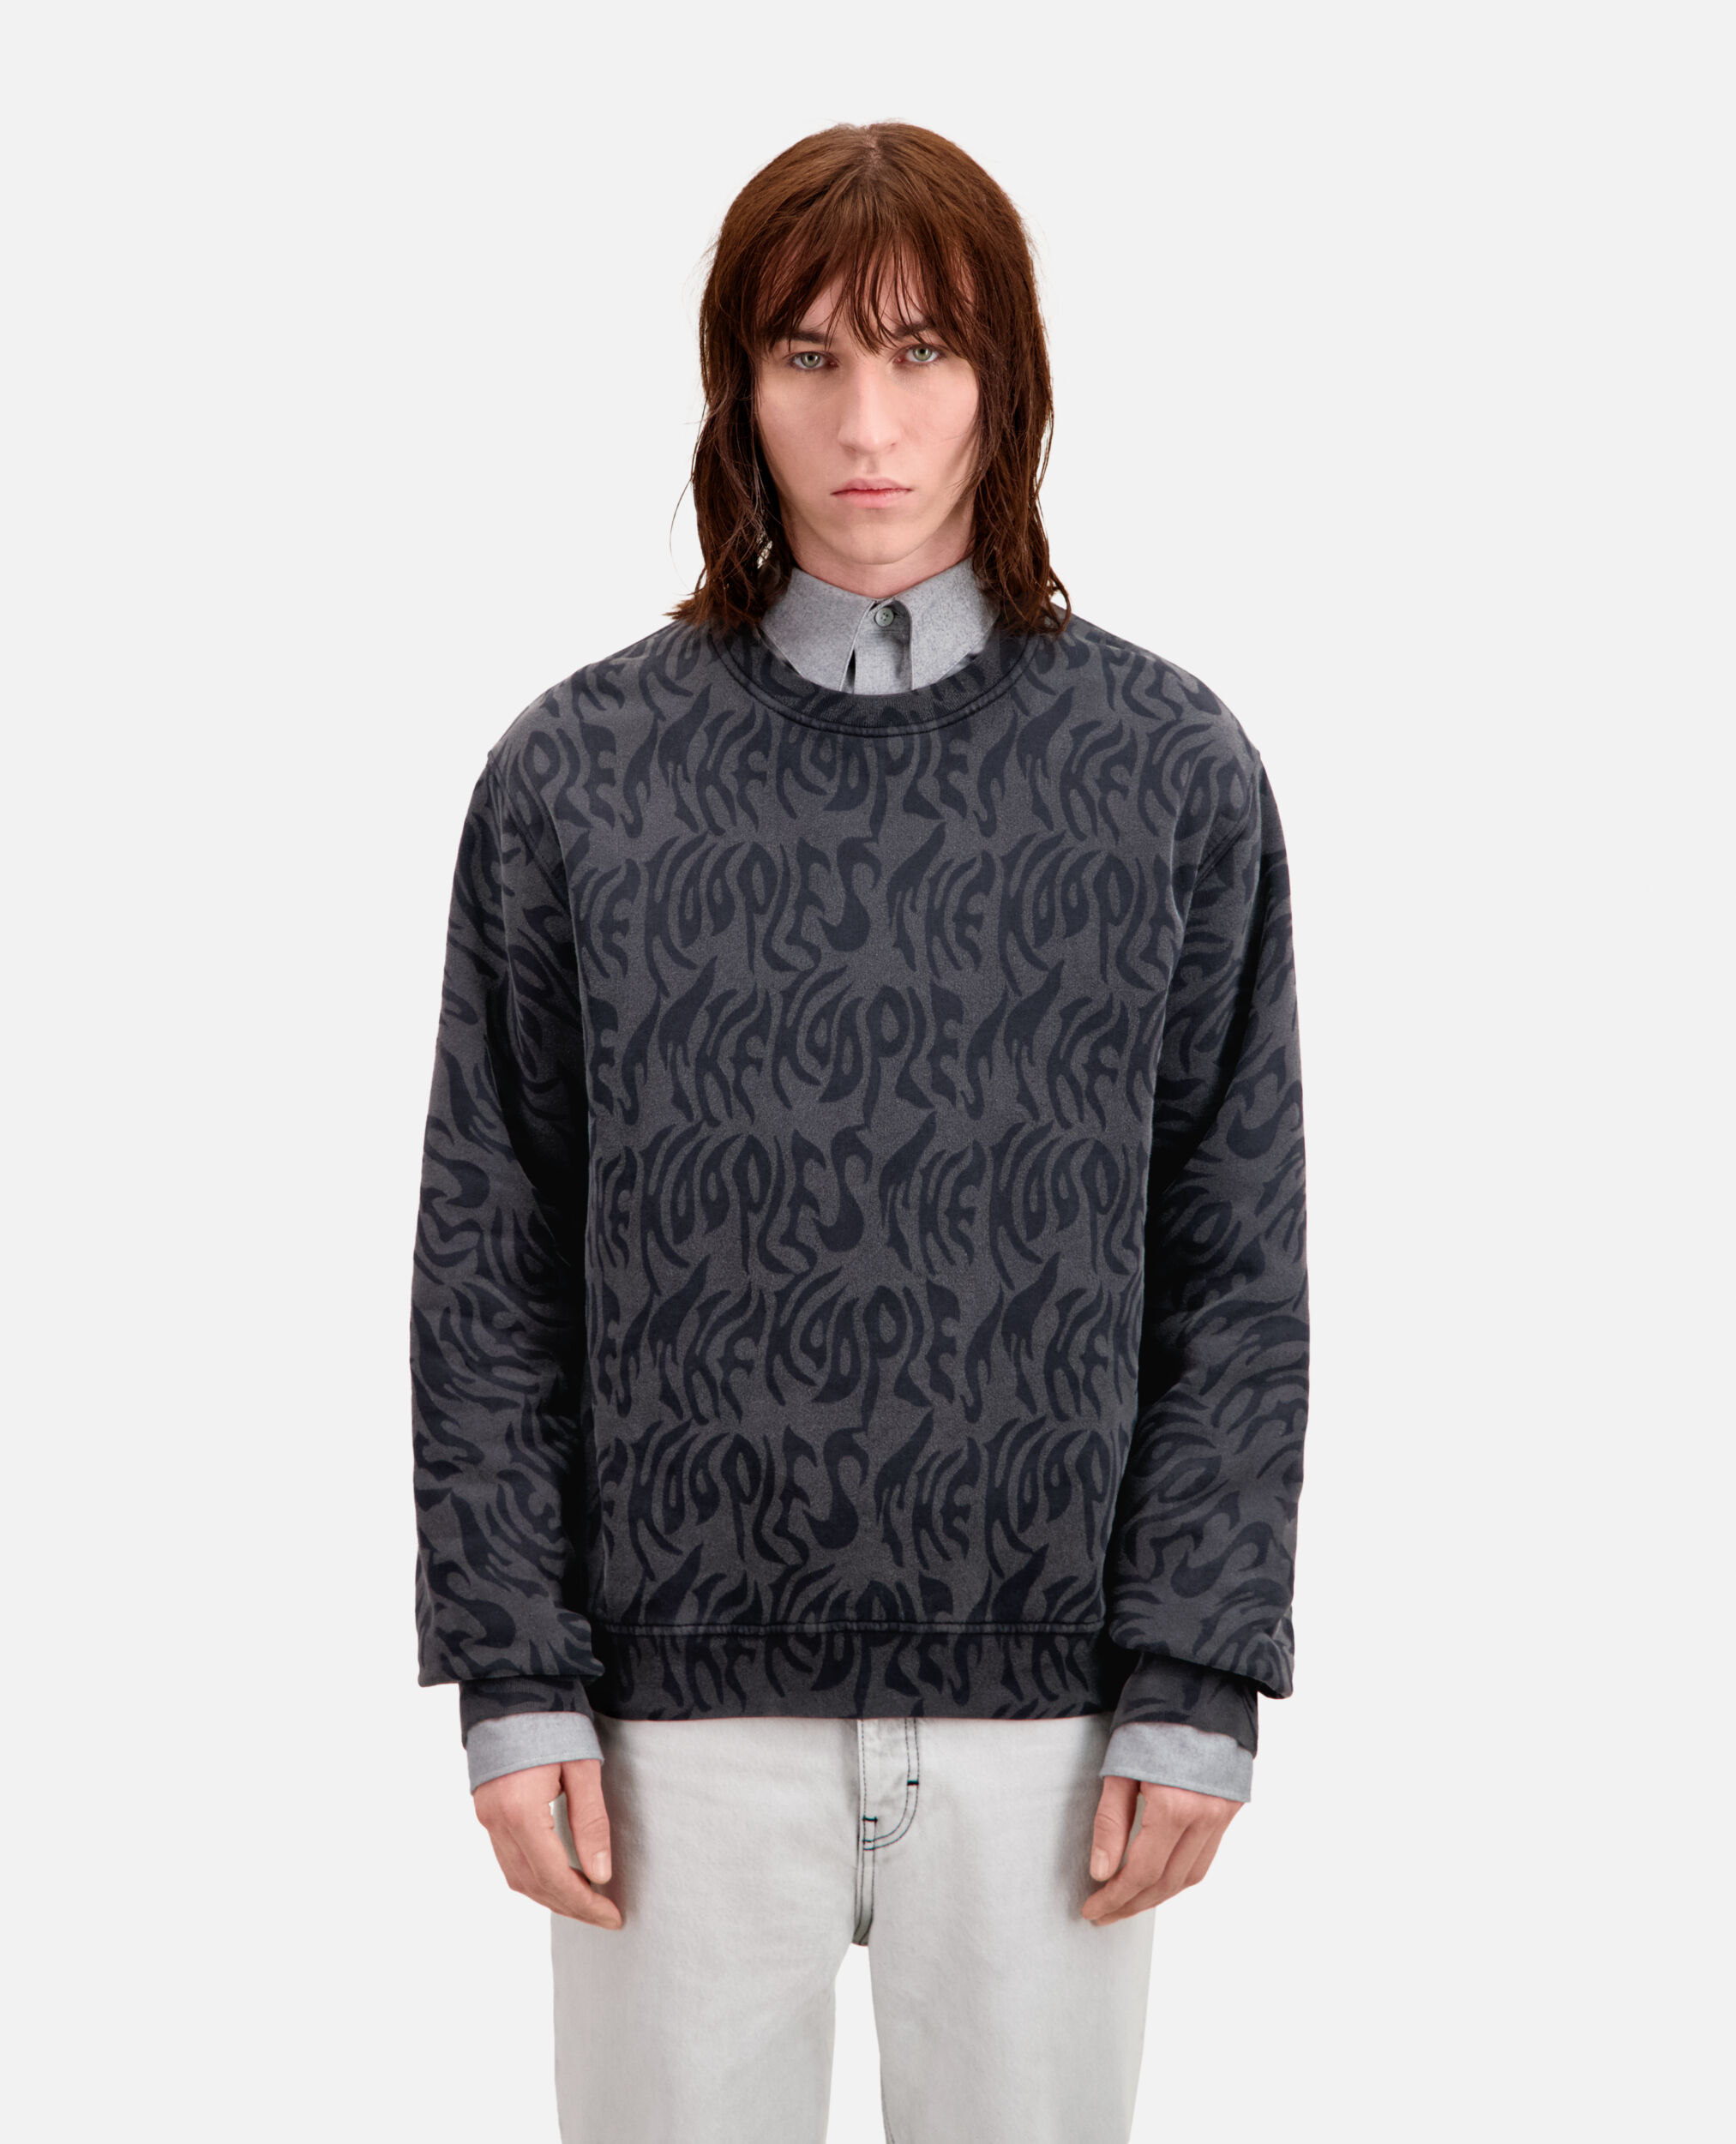 Herren Sweatshirt mit Print, BLACK WASHED, hi-res image number null